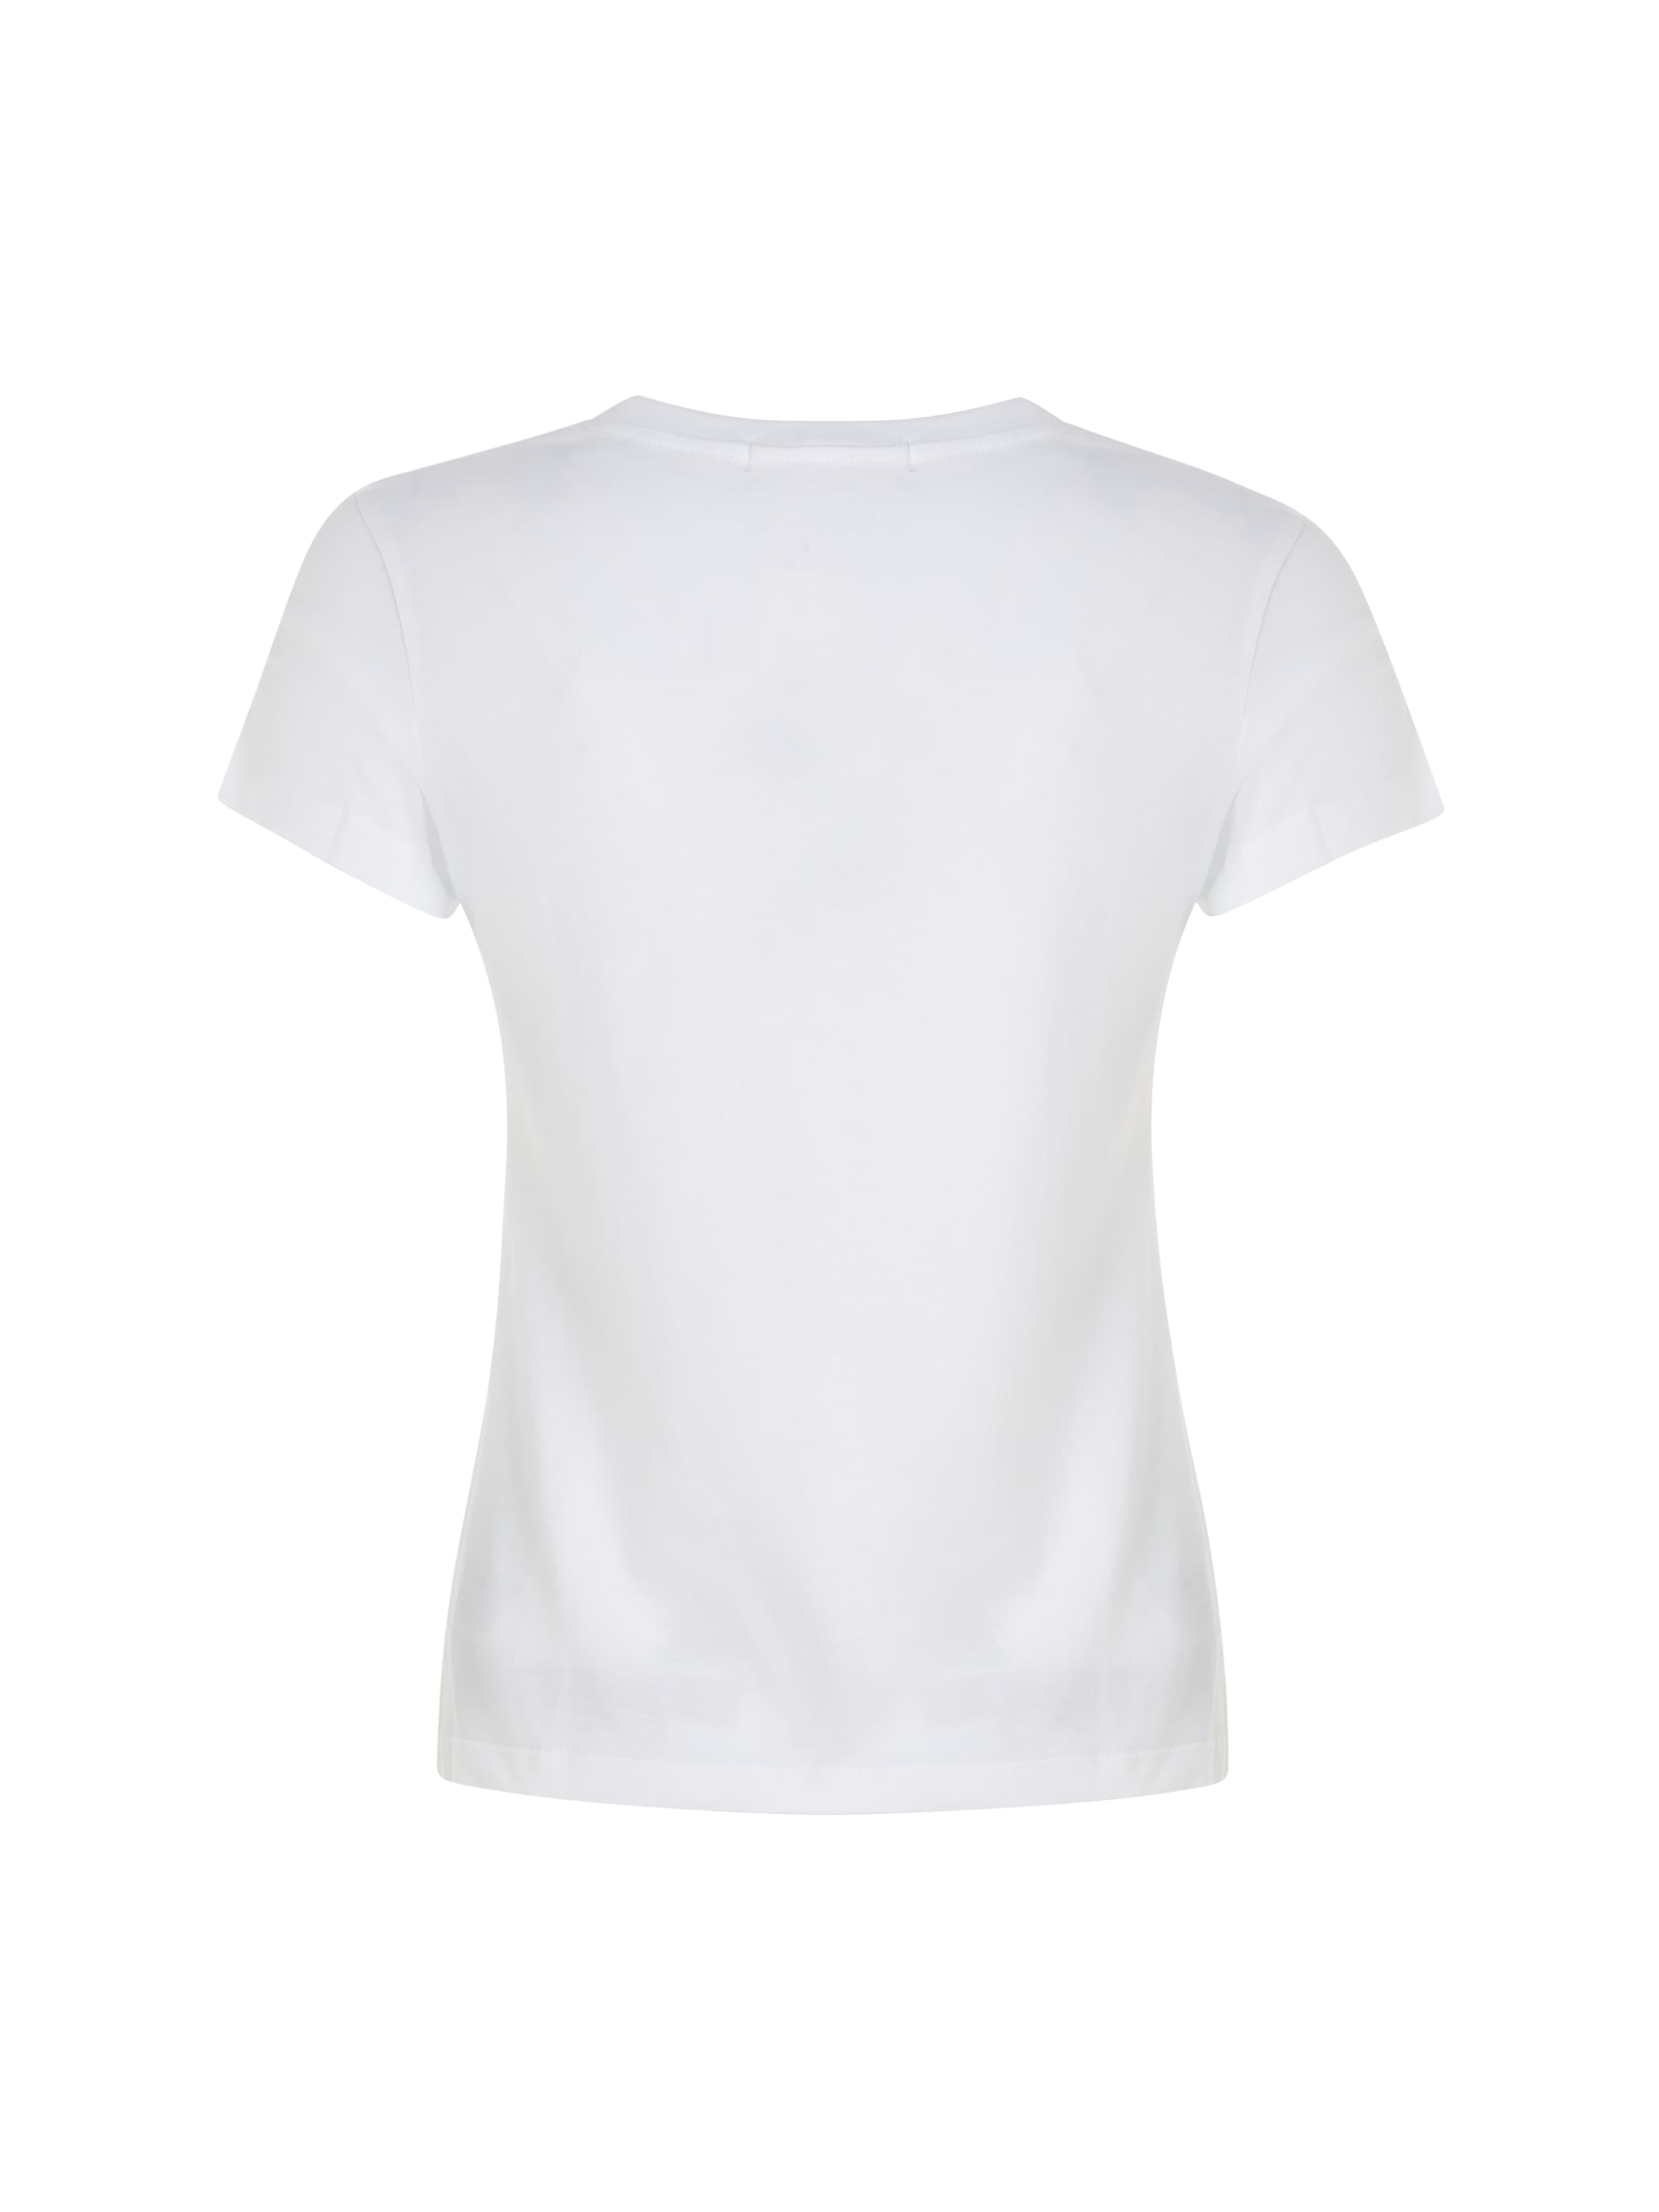 Calvin Klein Jeans T-Shirt »CORE INSTIT LOGO SLIM FIT TEE«, mit CK- Logoschriftzug bei ♕